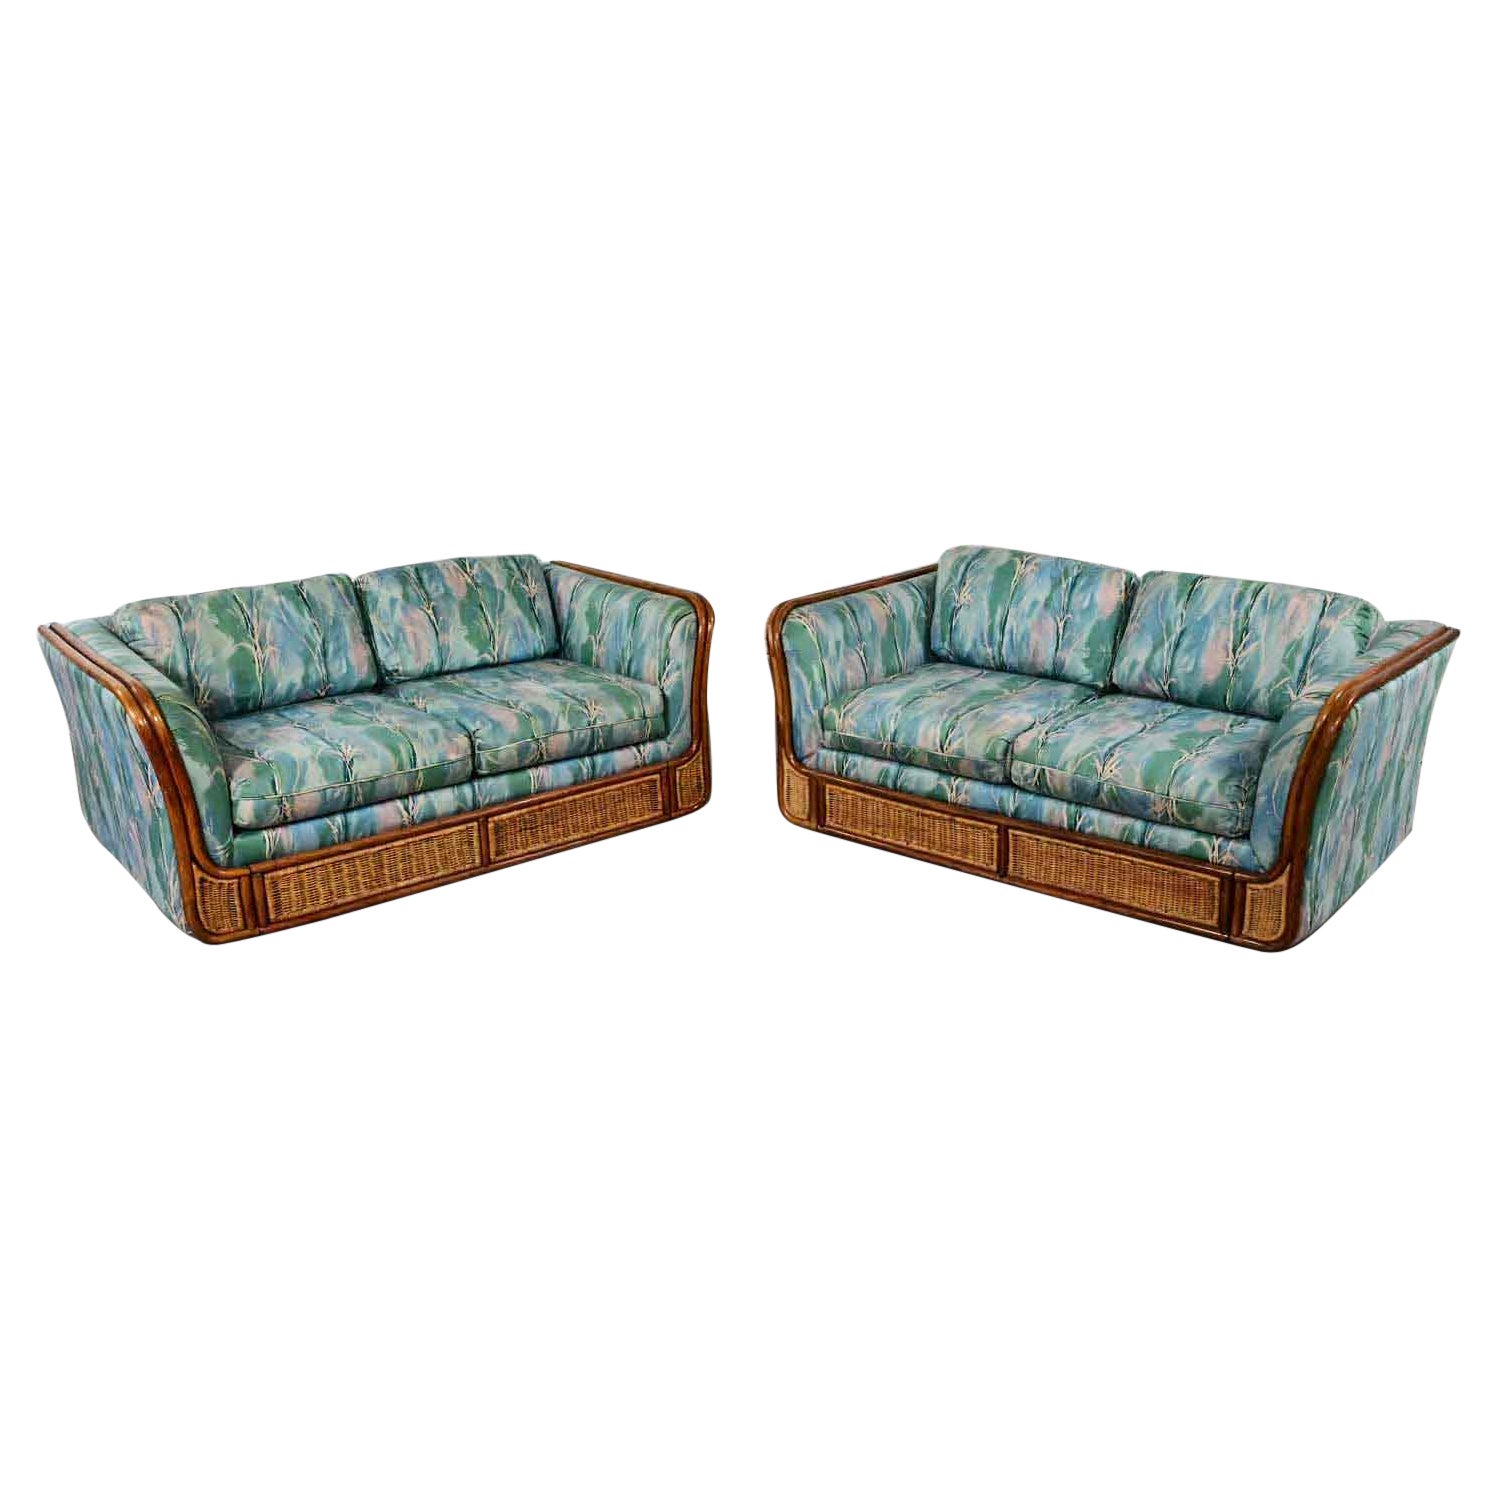 Fin du 20ème siècle Boho Chic Rotin et Osier Style Upholstering